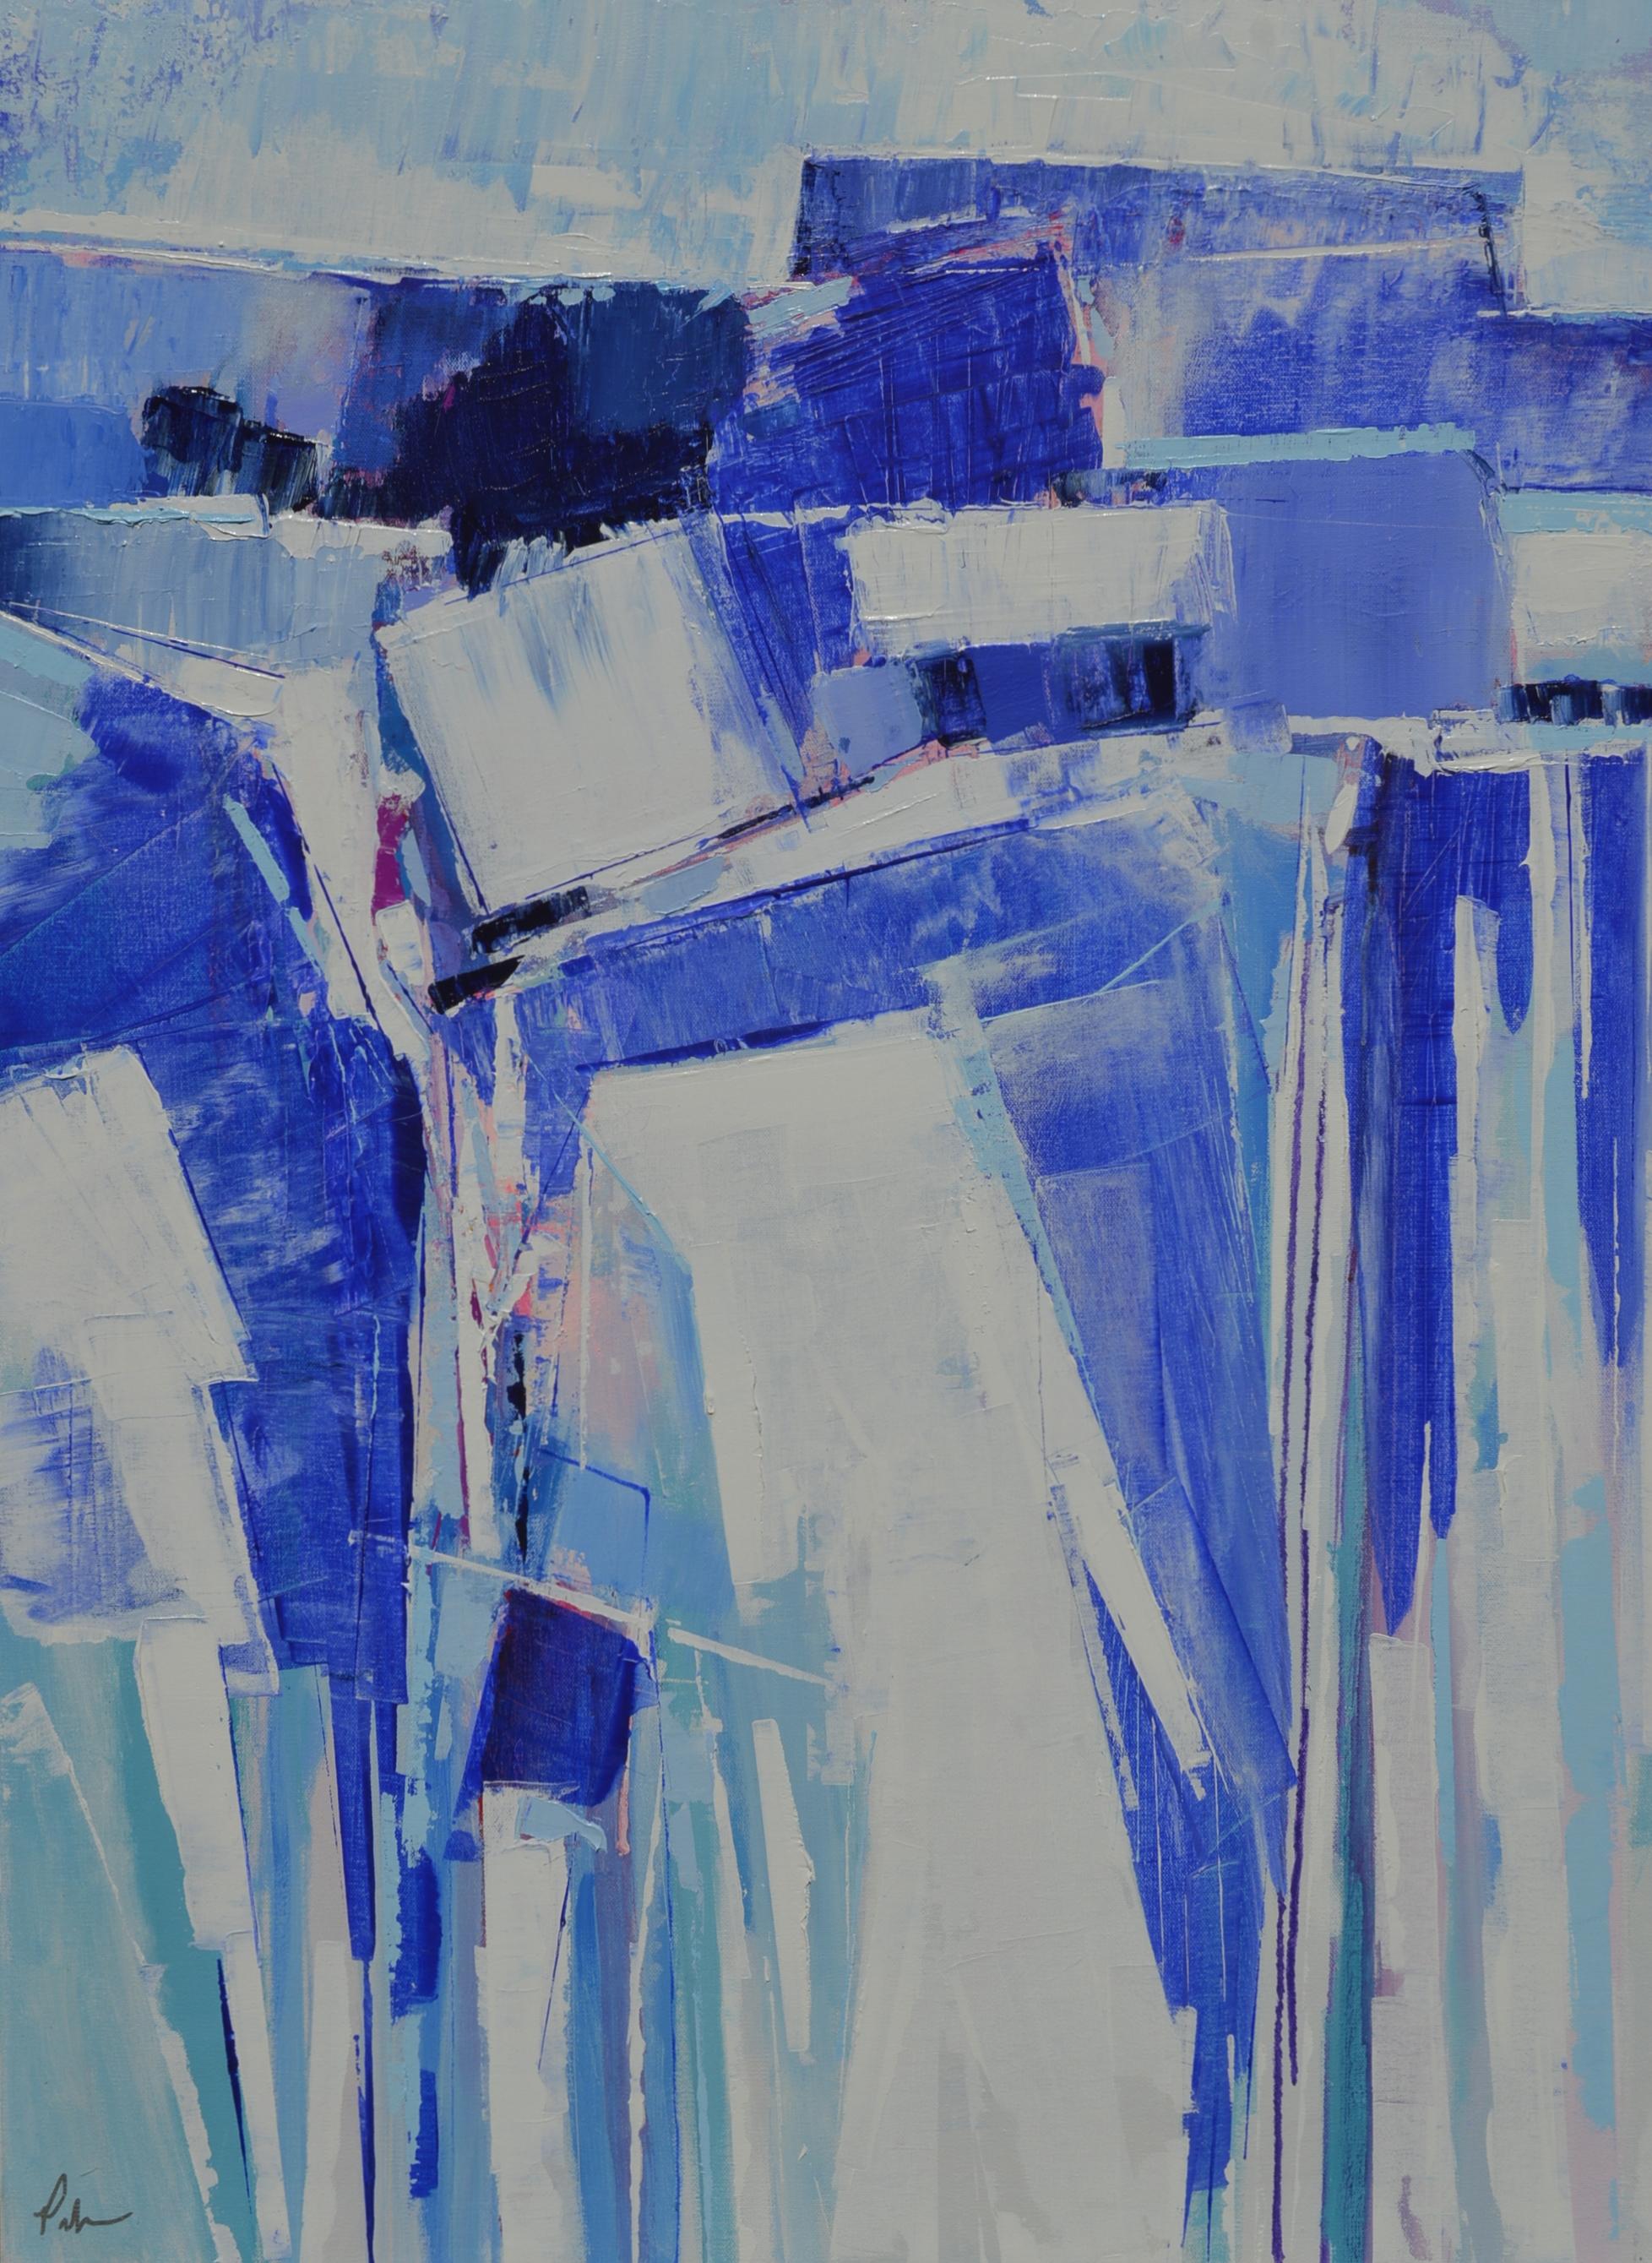 Abstract Painting Patrick O'Boyle - Bleu abstrait